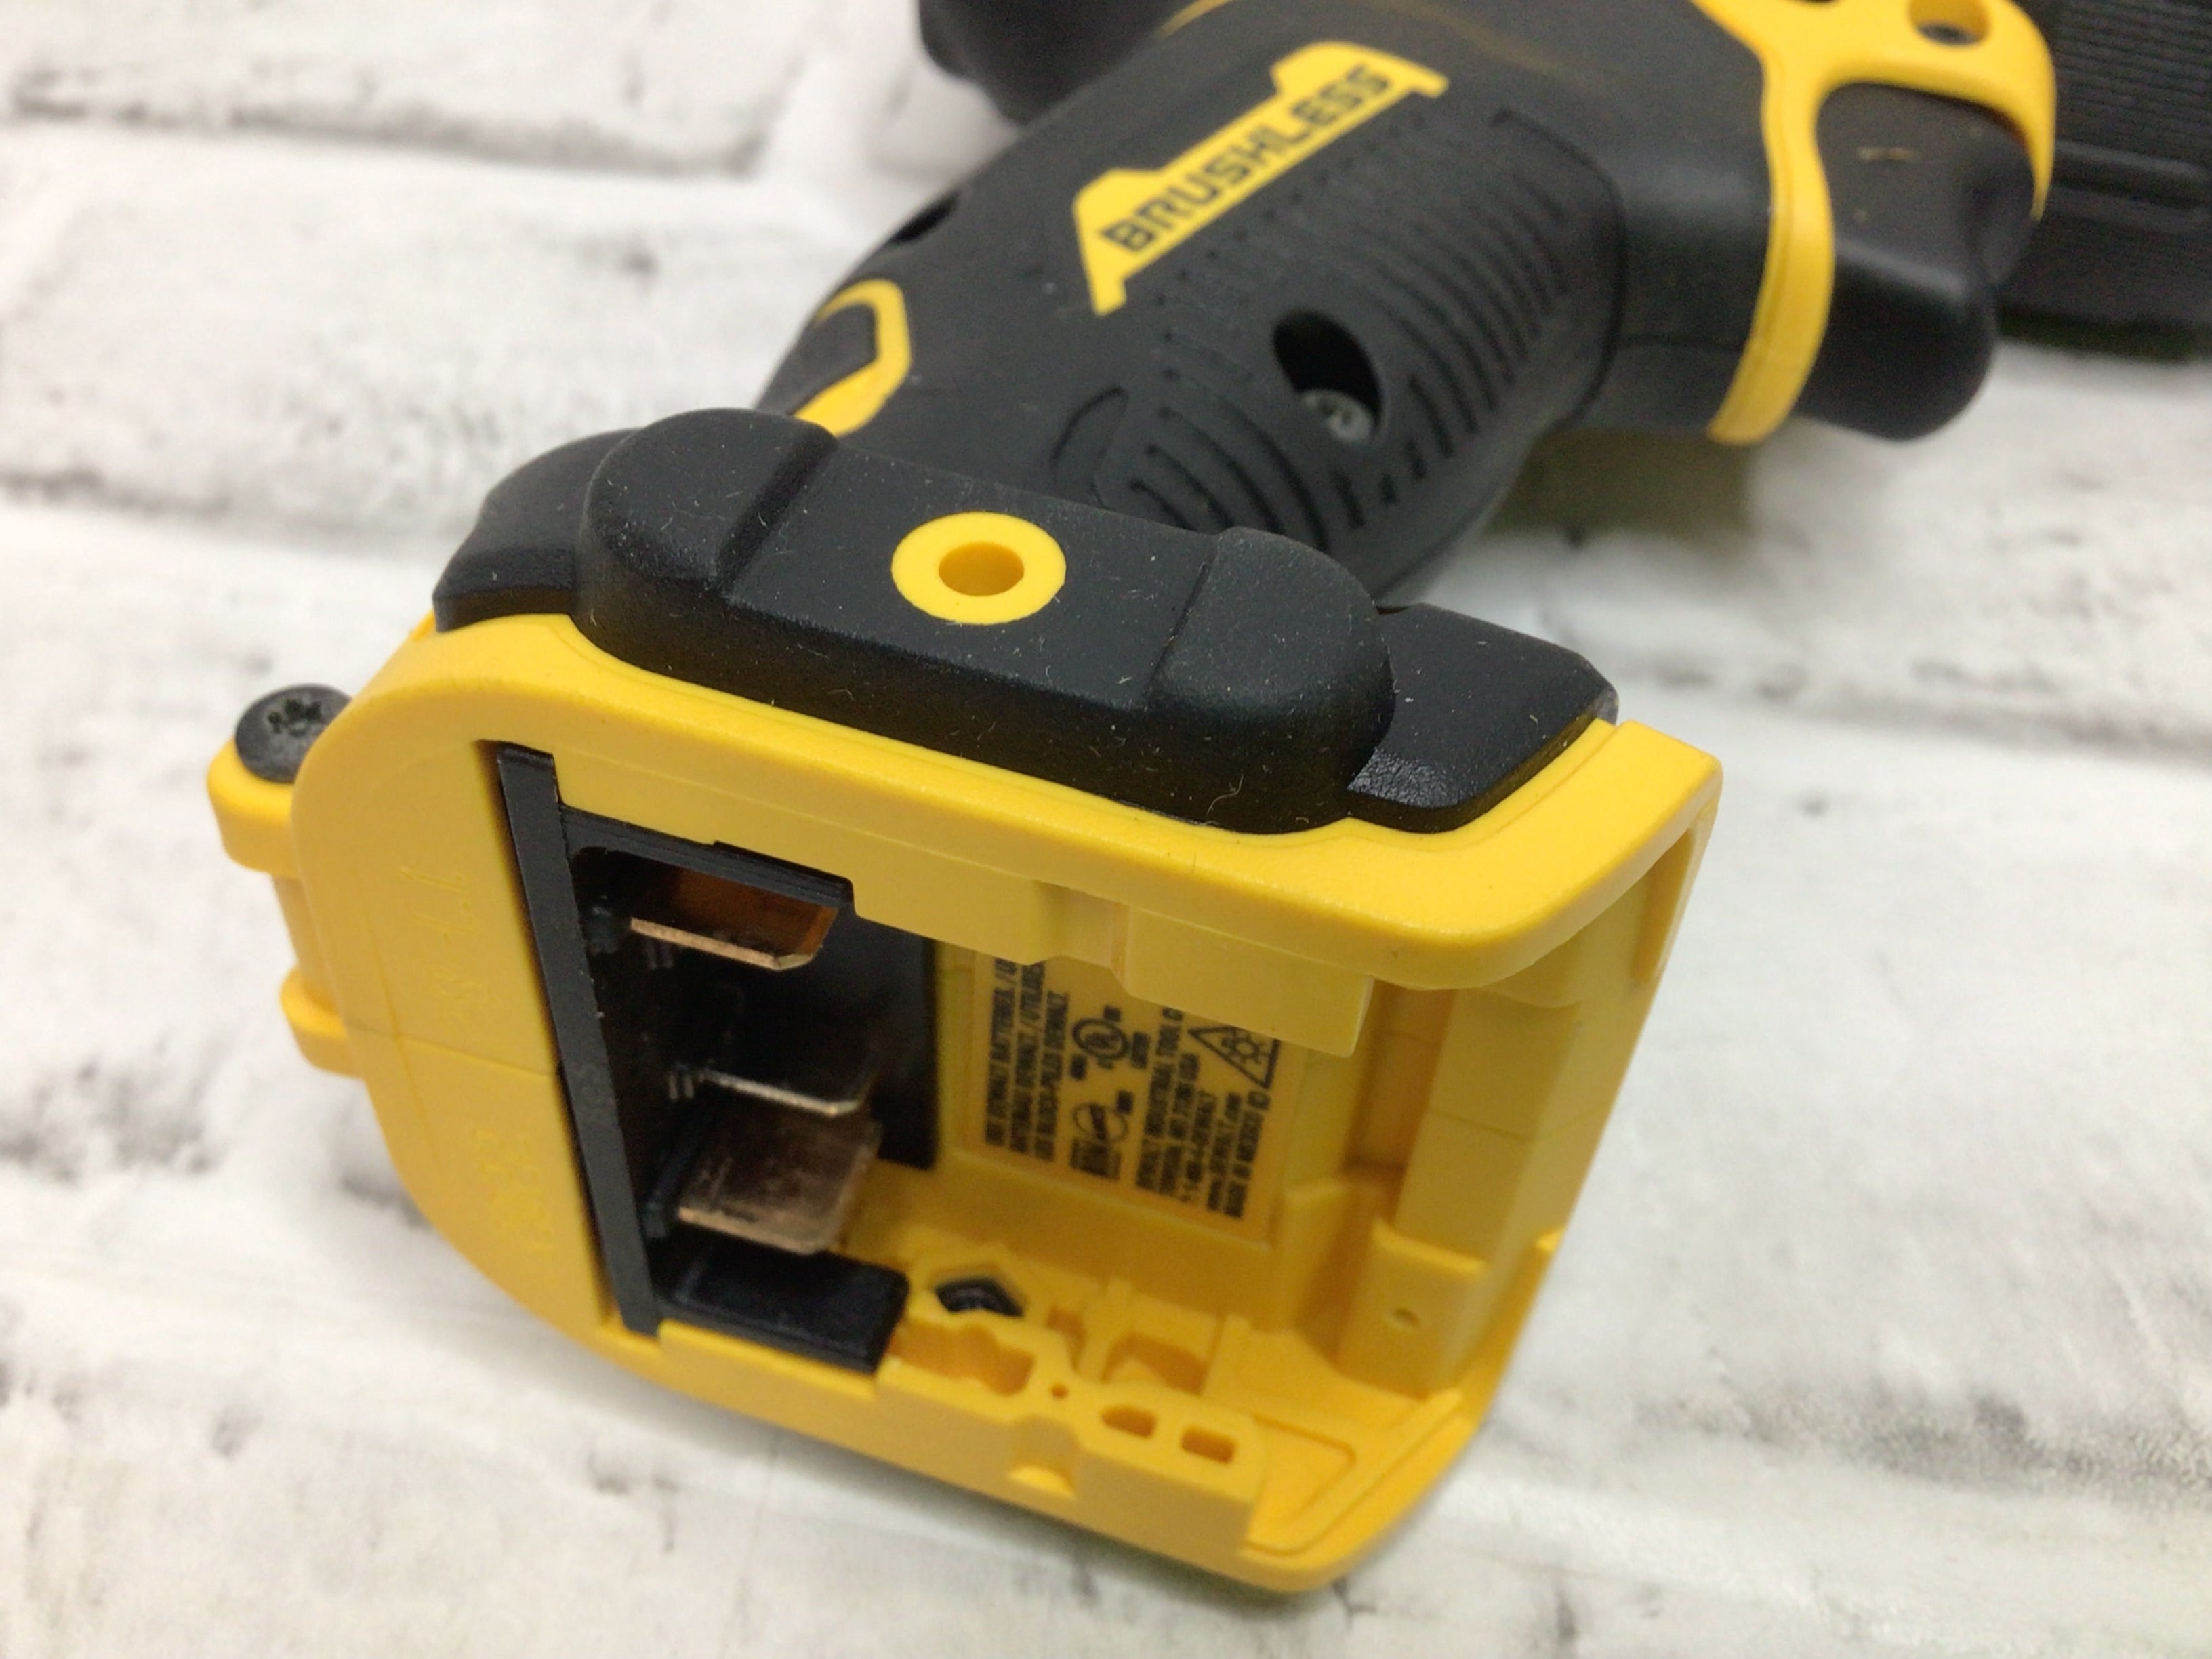 DEWALT 12V MAX XR Hammer Drill (Tool Only) DCD706B - Yellow *OPEN BOX* (8142616002798)